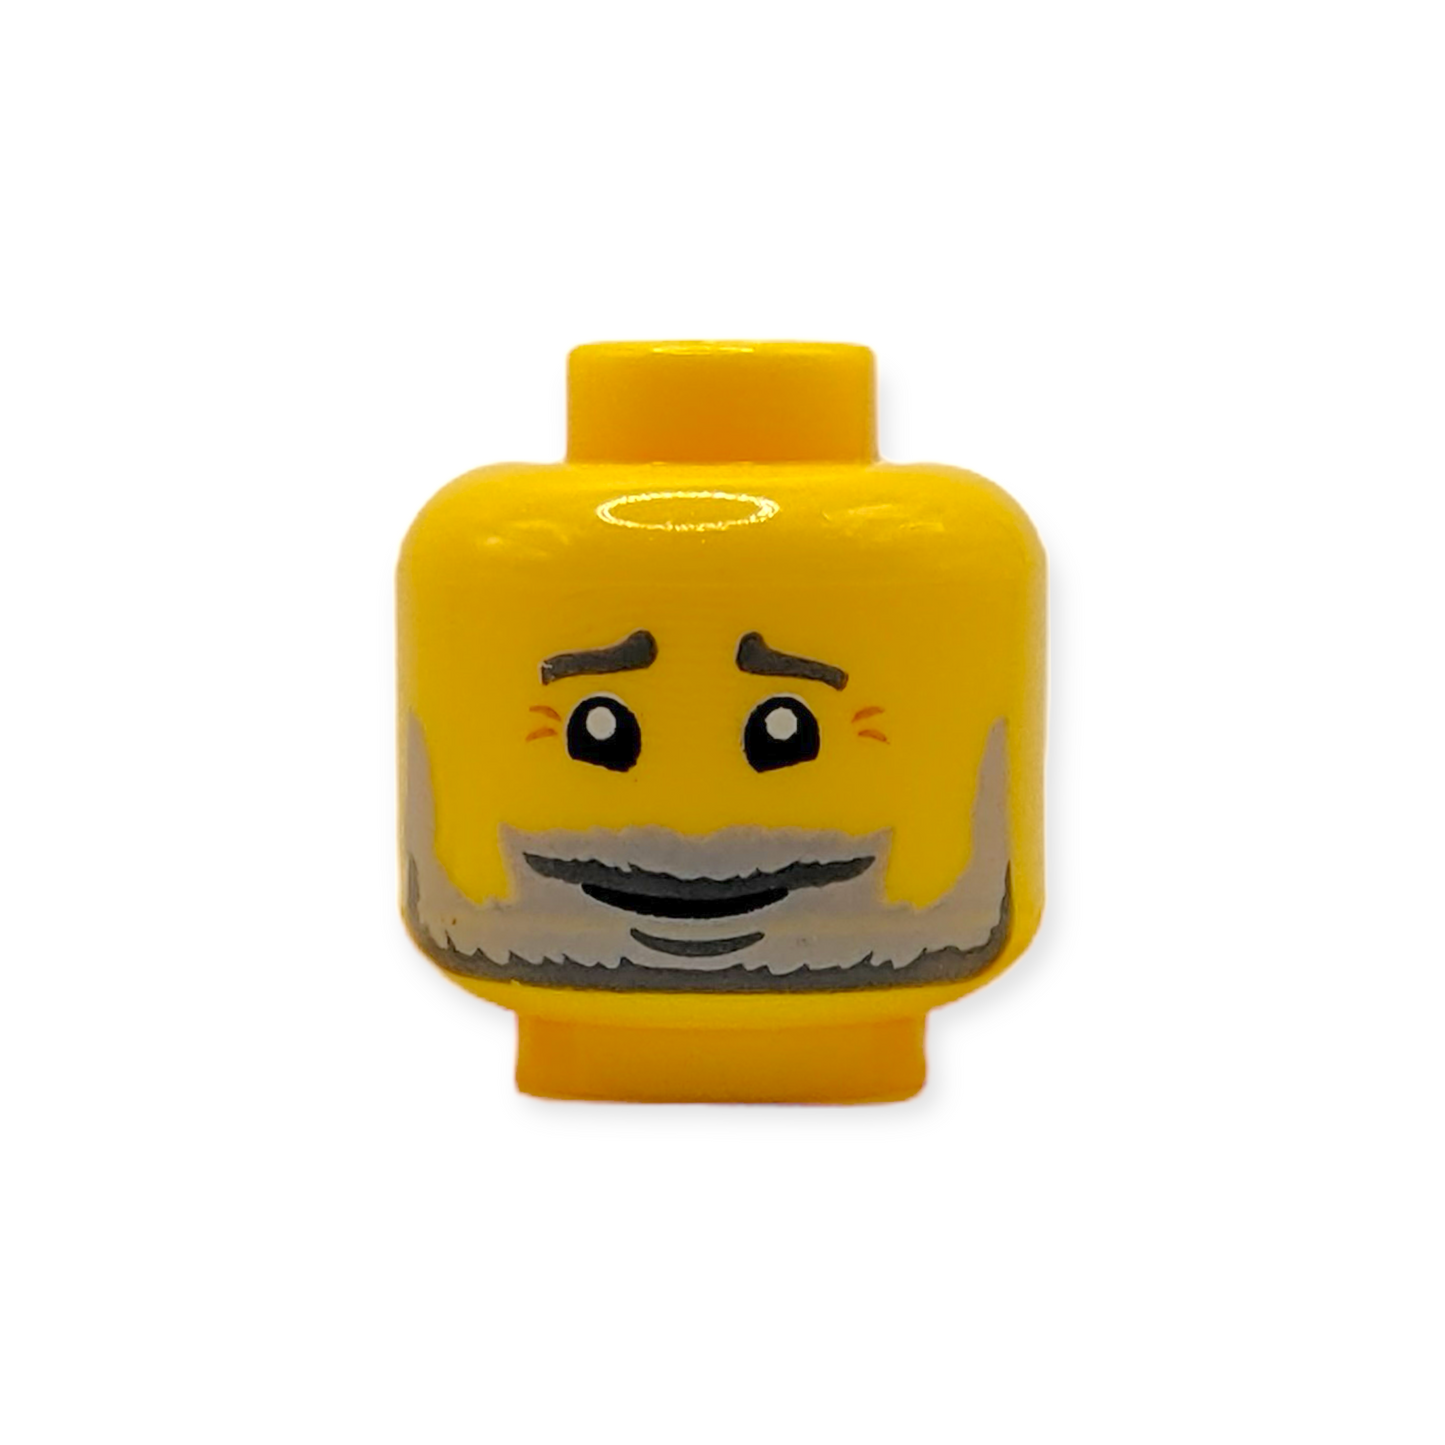 LEGO Head - 3816 Dark Bluish Gray Eyebrows